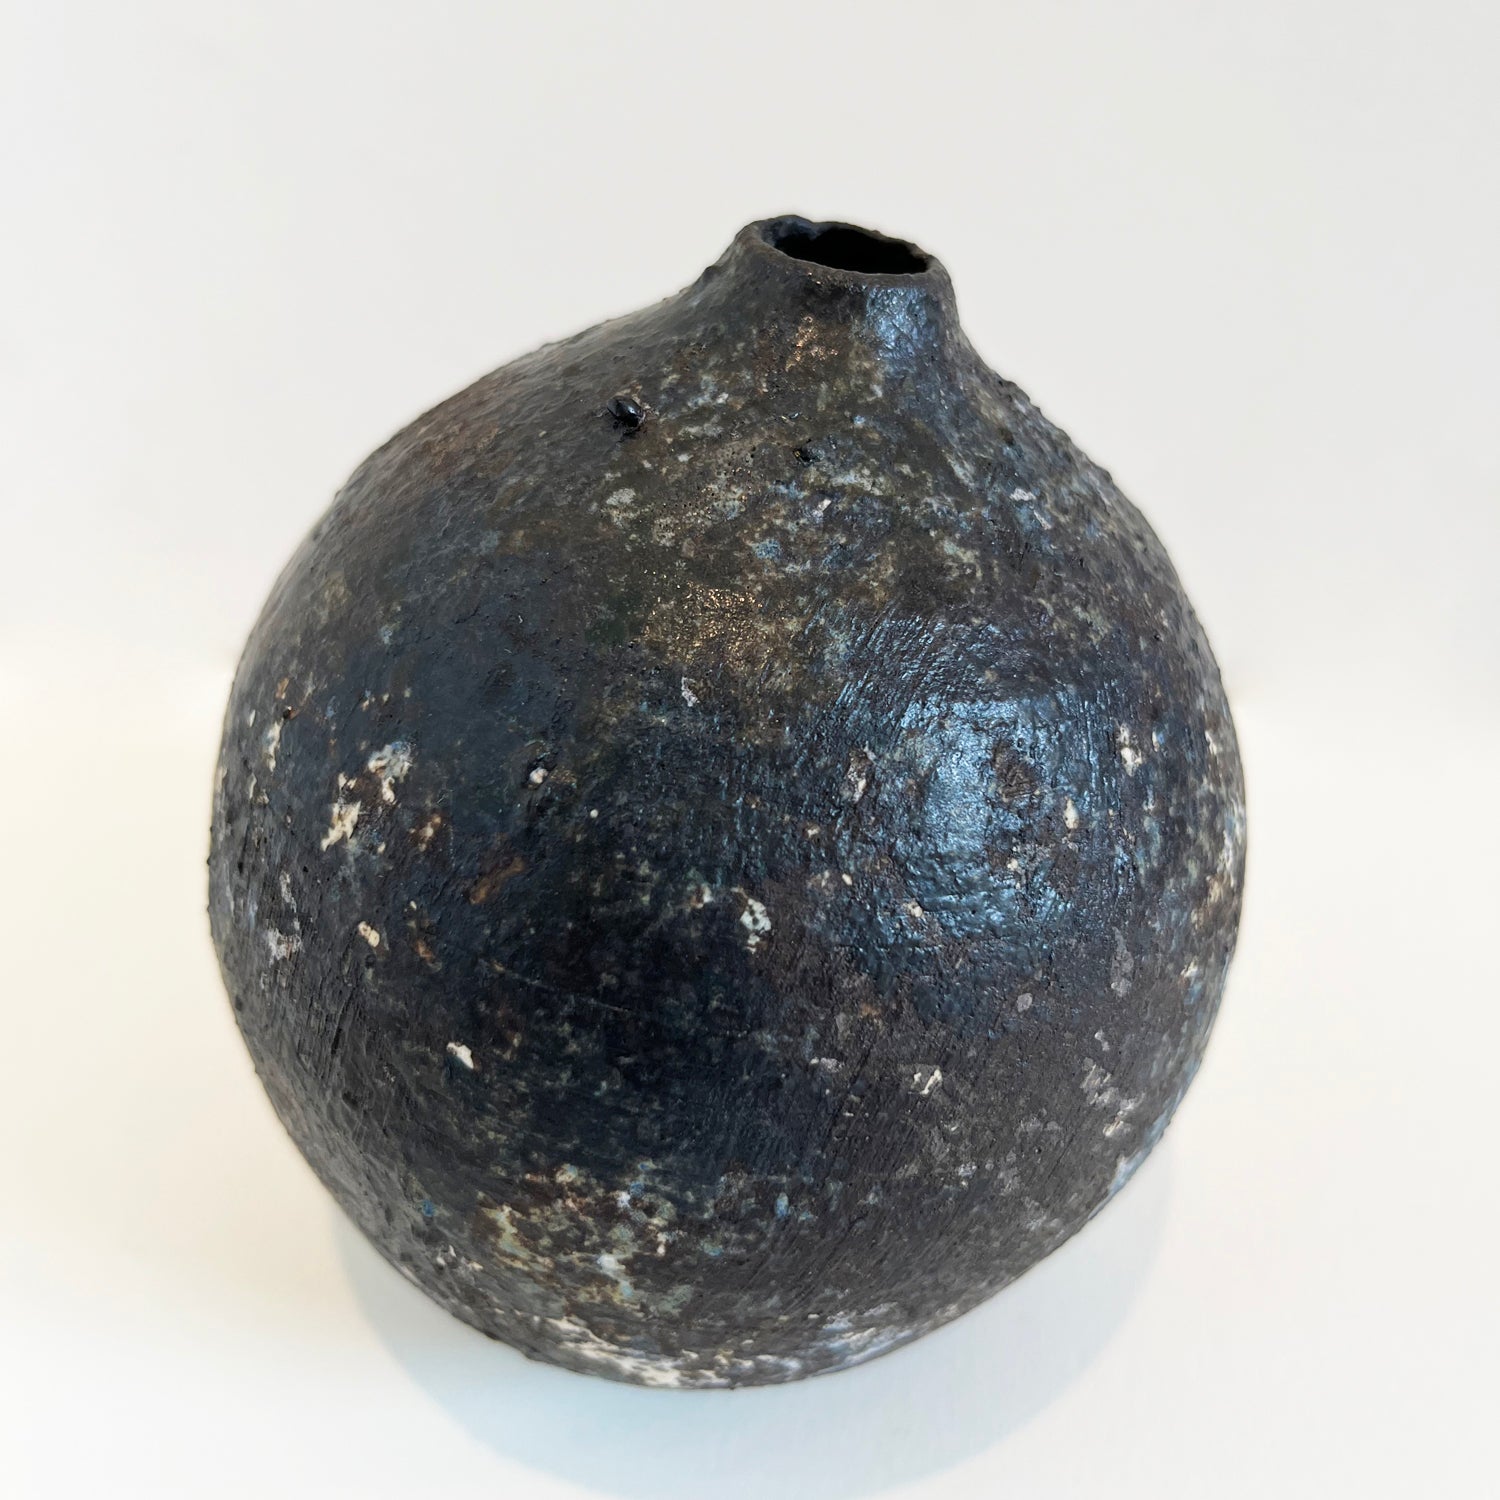 Makiko Hicher - Small Round Vase, 5" x 4" x 4"